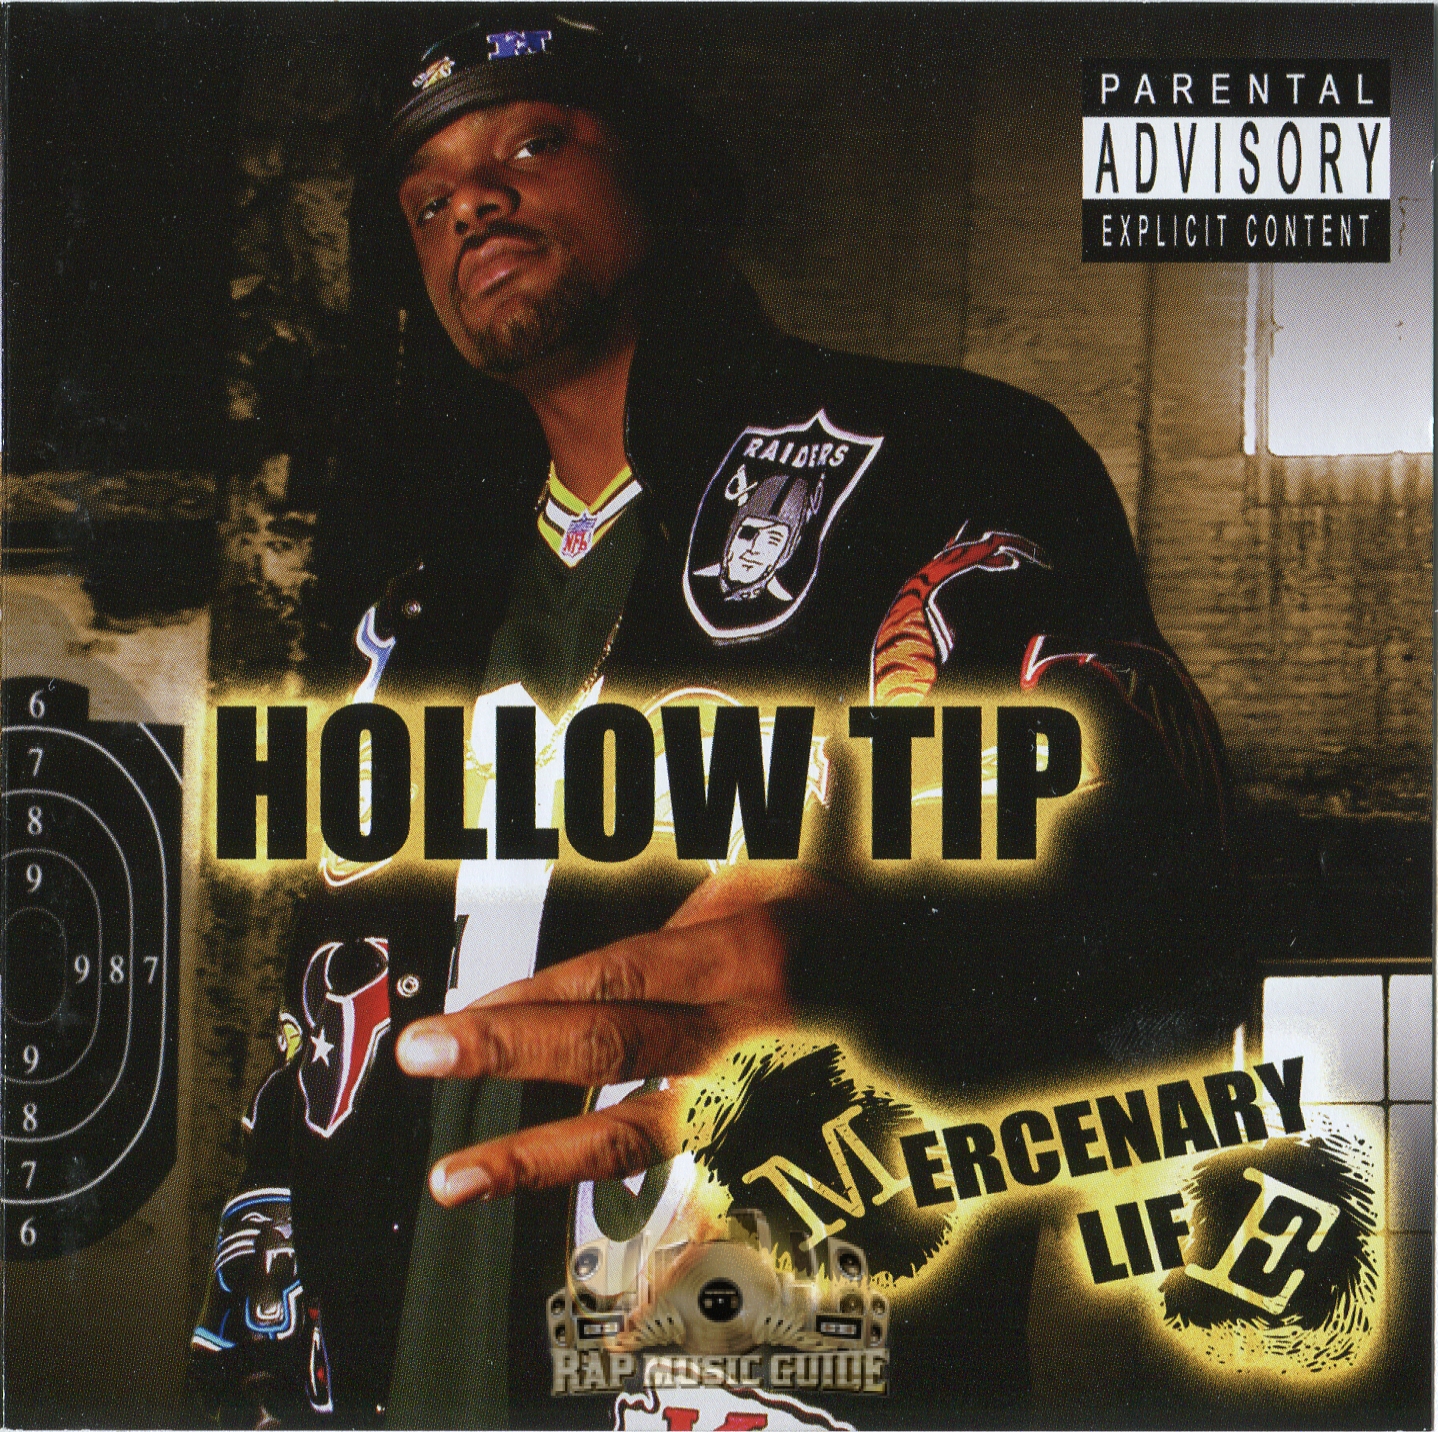 Hollow Tip - Mercenary Life: CD | Rap Music Guide